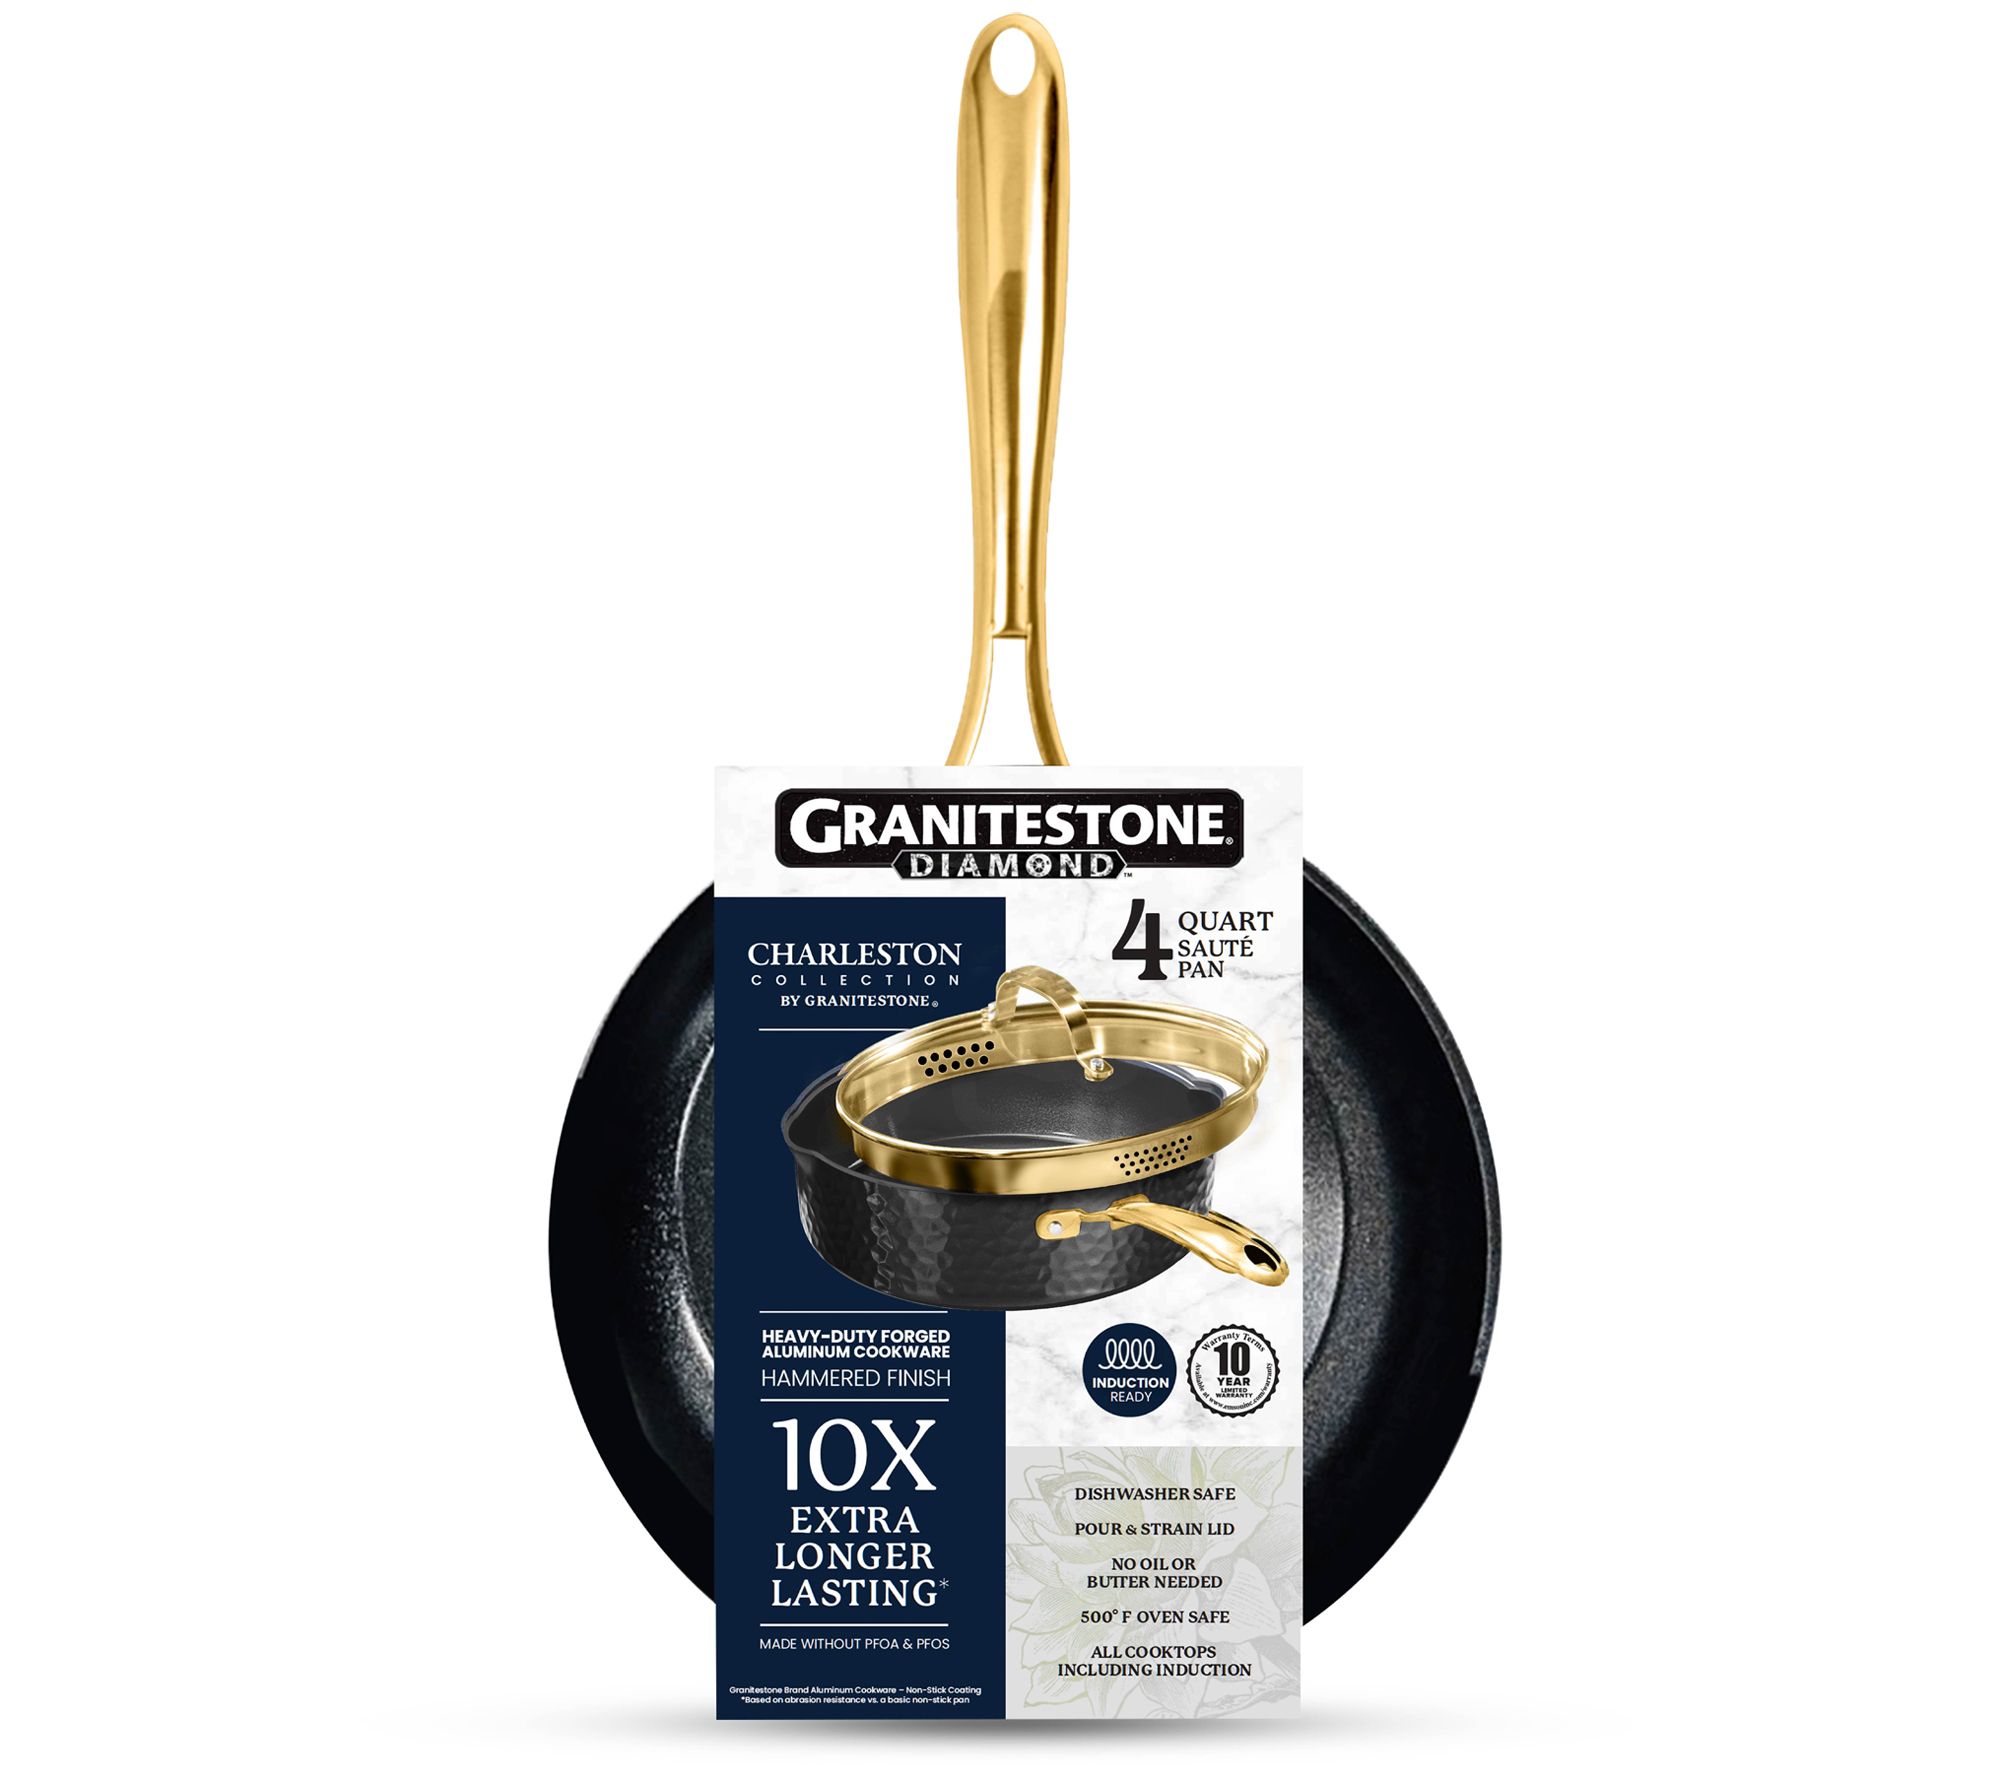 Granitestone 10-Piece Hammered Nonstick Cookware Set - Black